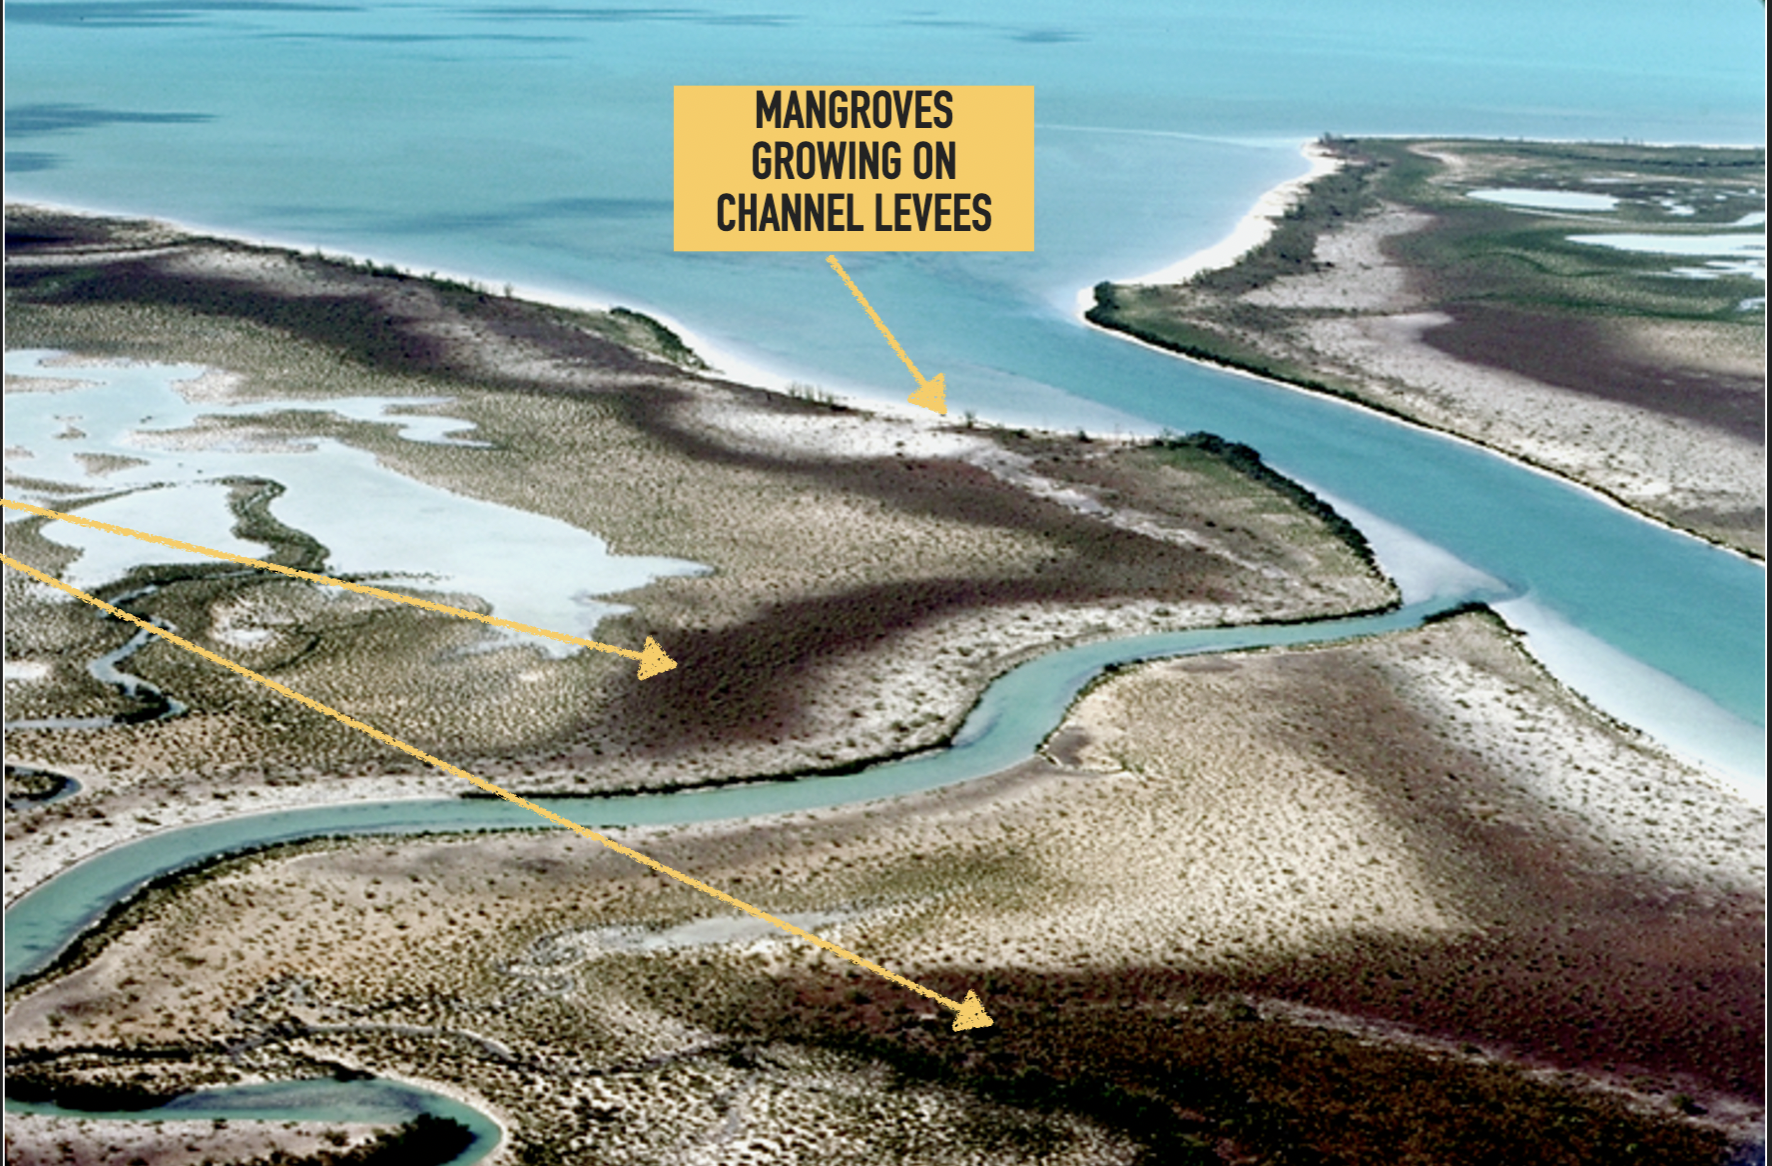 <ol><li><p>Algal mats</p></li><li><p>Mangroves growing on channel levees</p></li><li><p>Desiccation cracks (even in humid settings)</p></li><li><p>Cracking of microbial mats</p></li></ol>